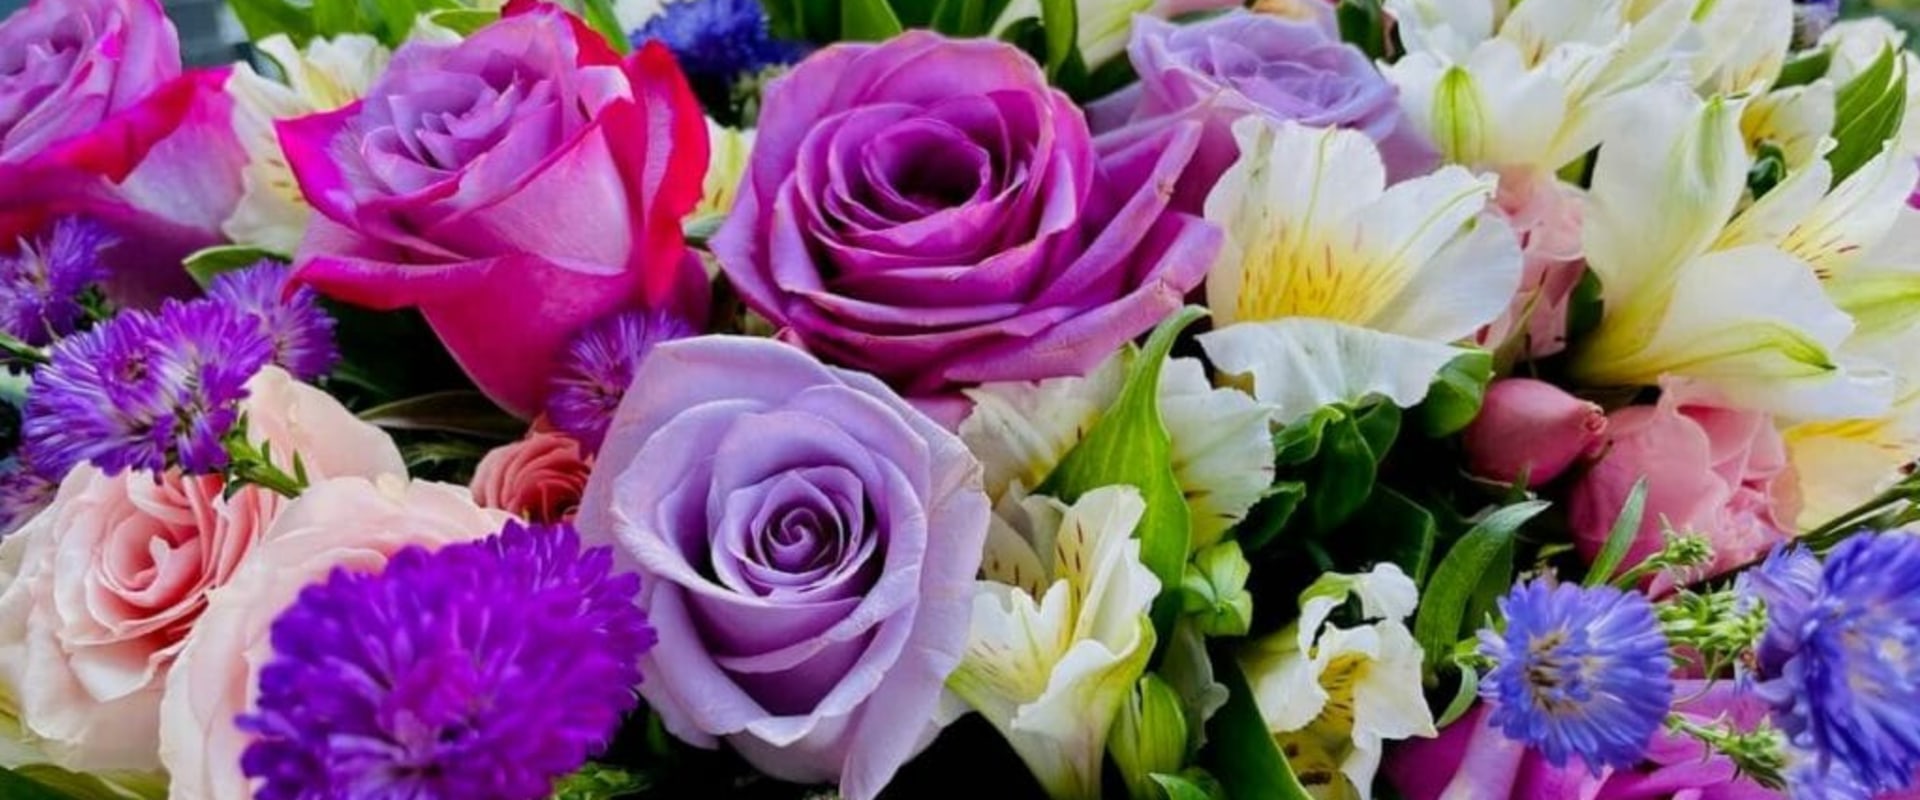 Does an Oklahoma City Florist Offer Custom Flower Arrangements?